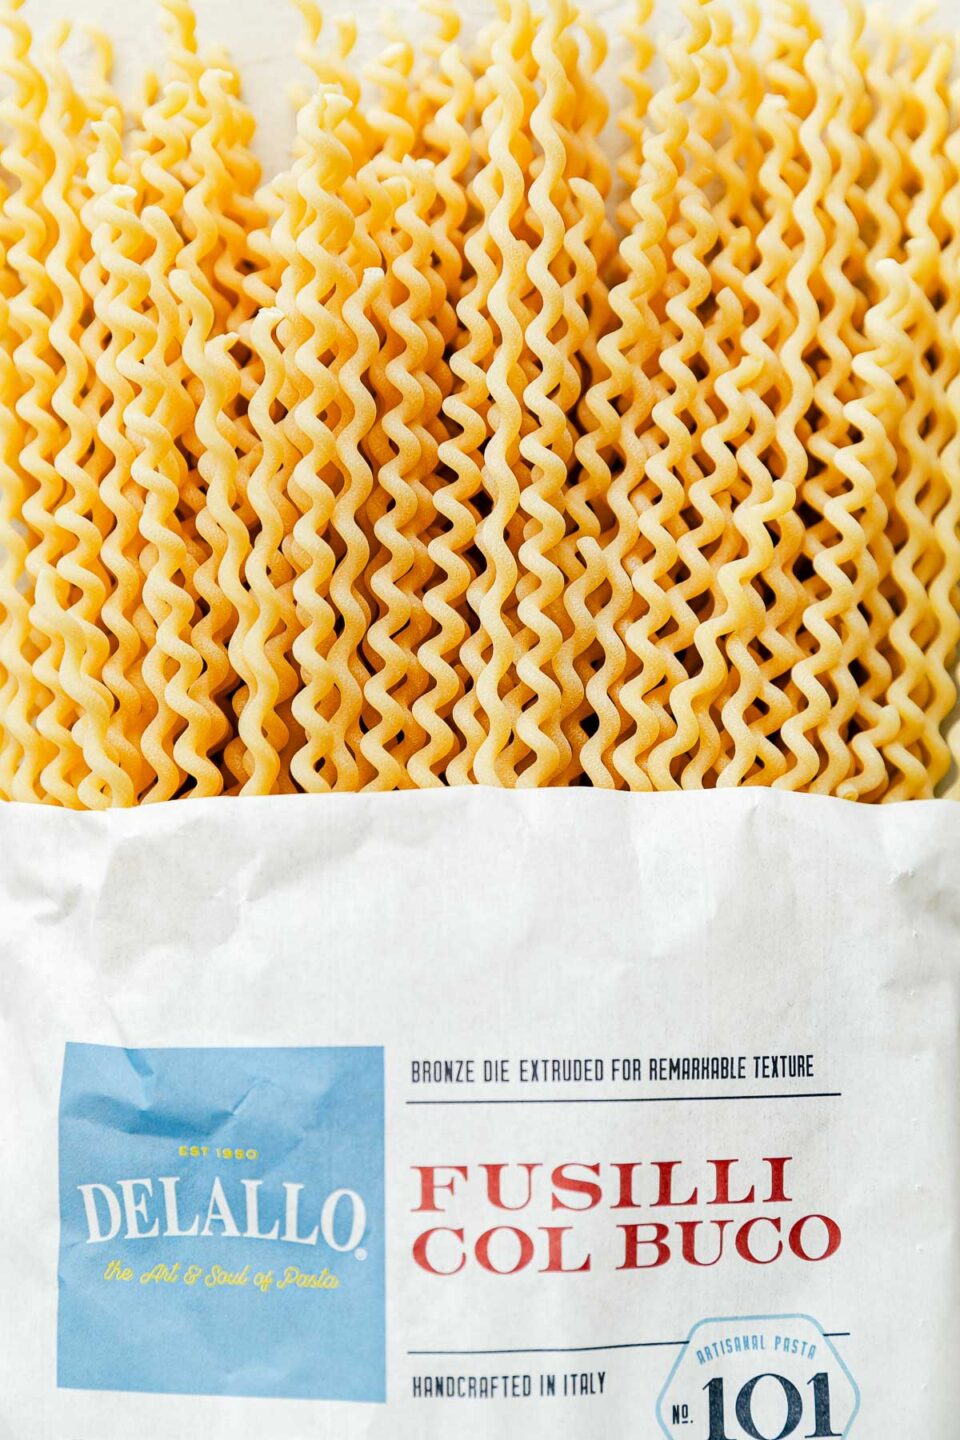 A close-up shot of dry fusilli pasta halfway out of a bag.